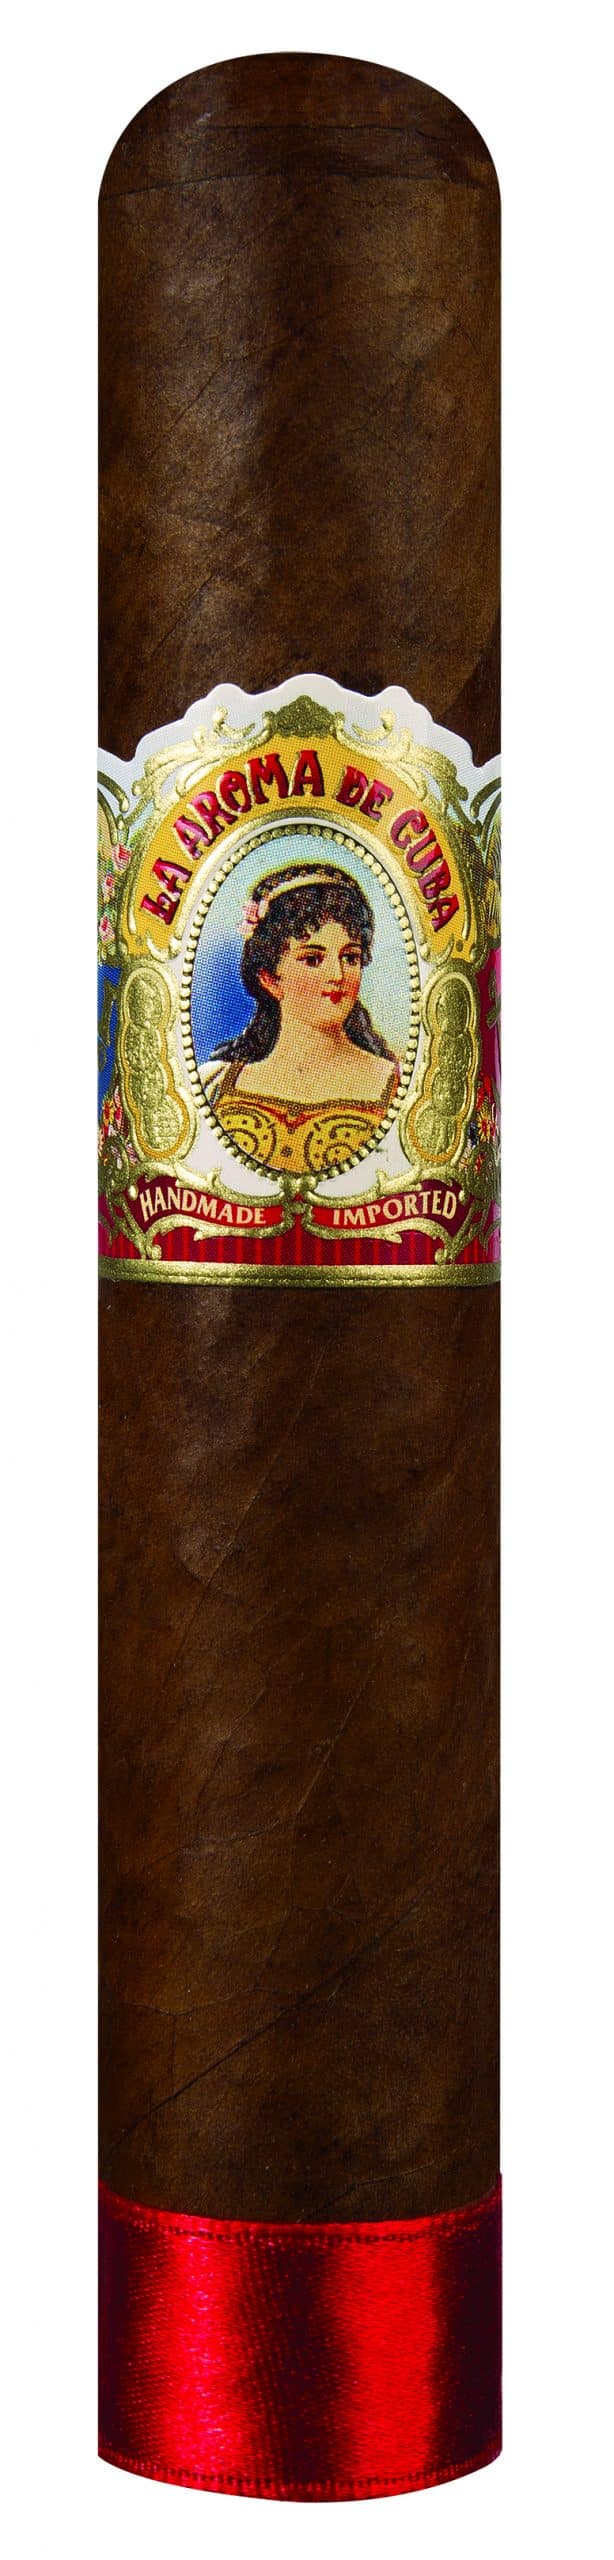 Single La Aroma de Cuba Immensa cigar